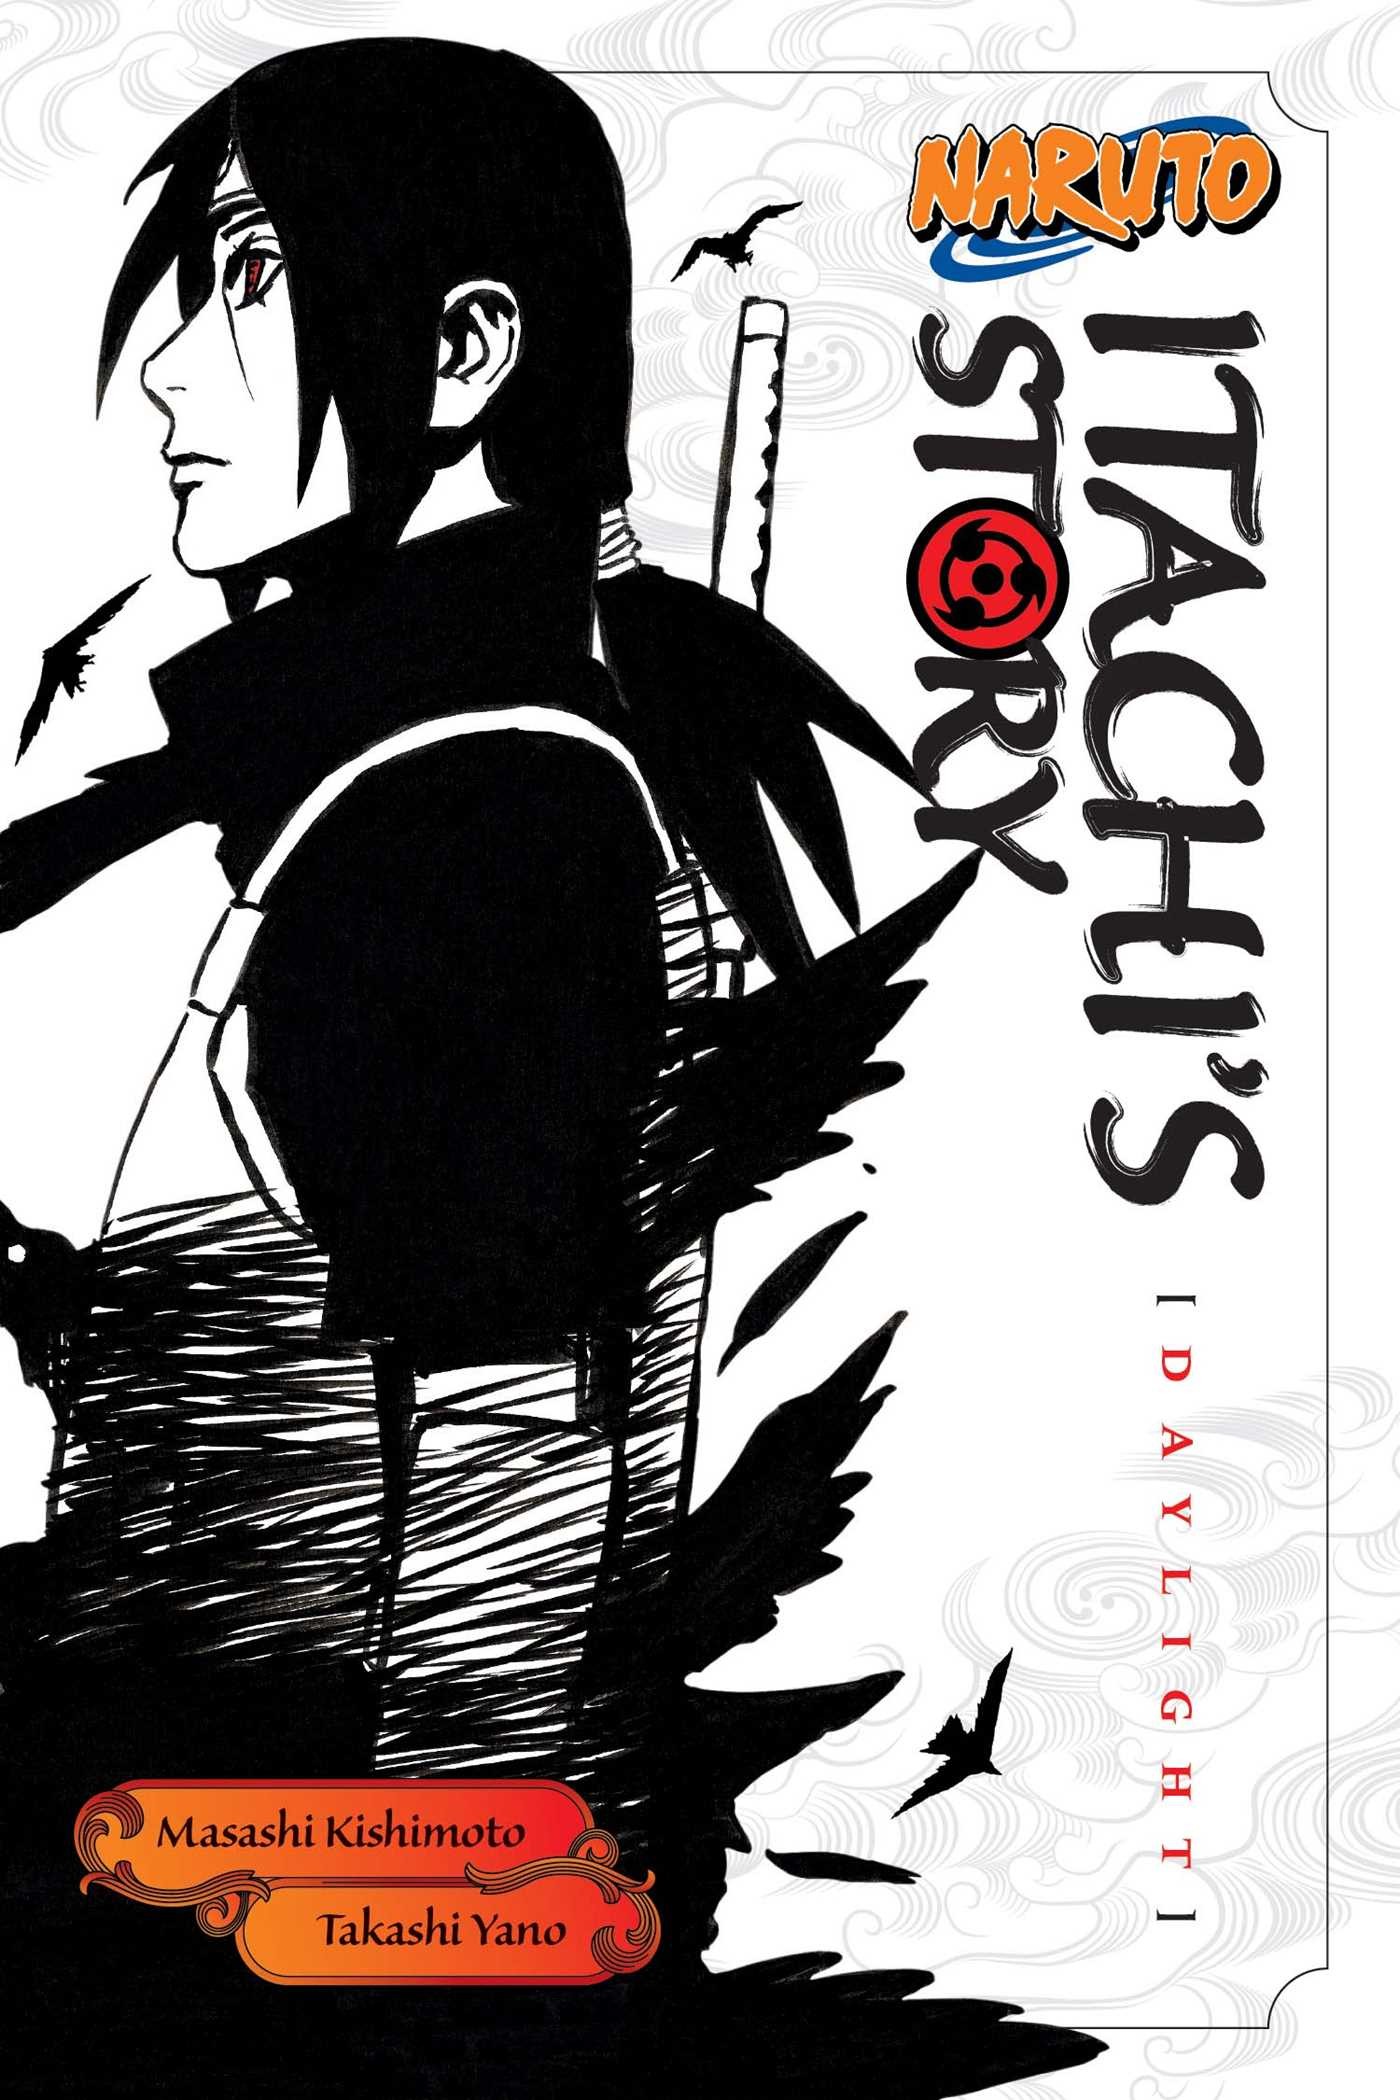 Naruto: Itachi's Story, Vol. 1 Daylight (Light Novel)